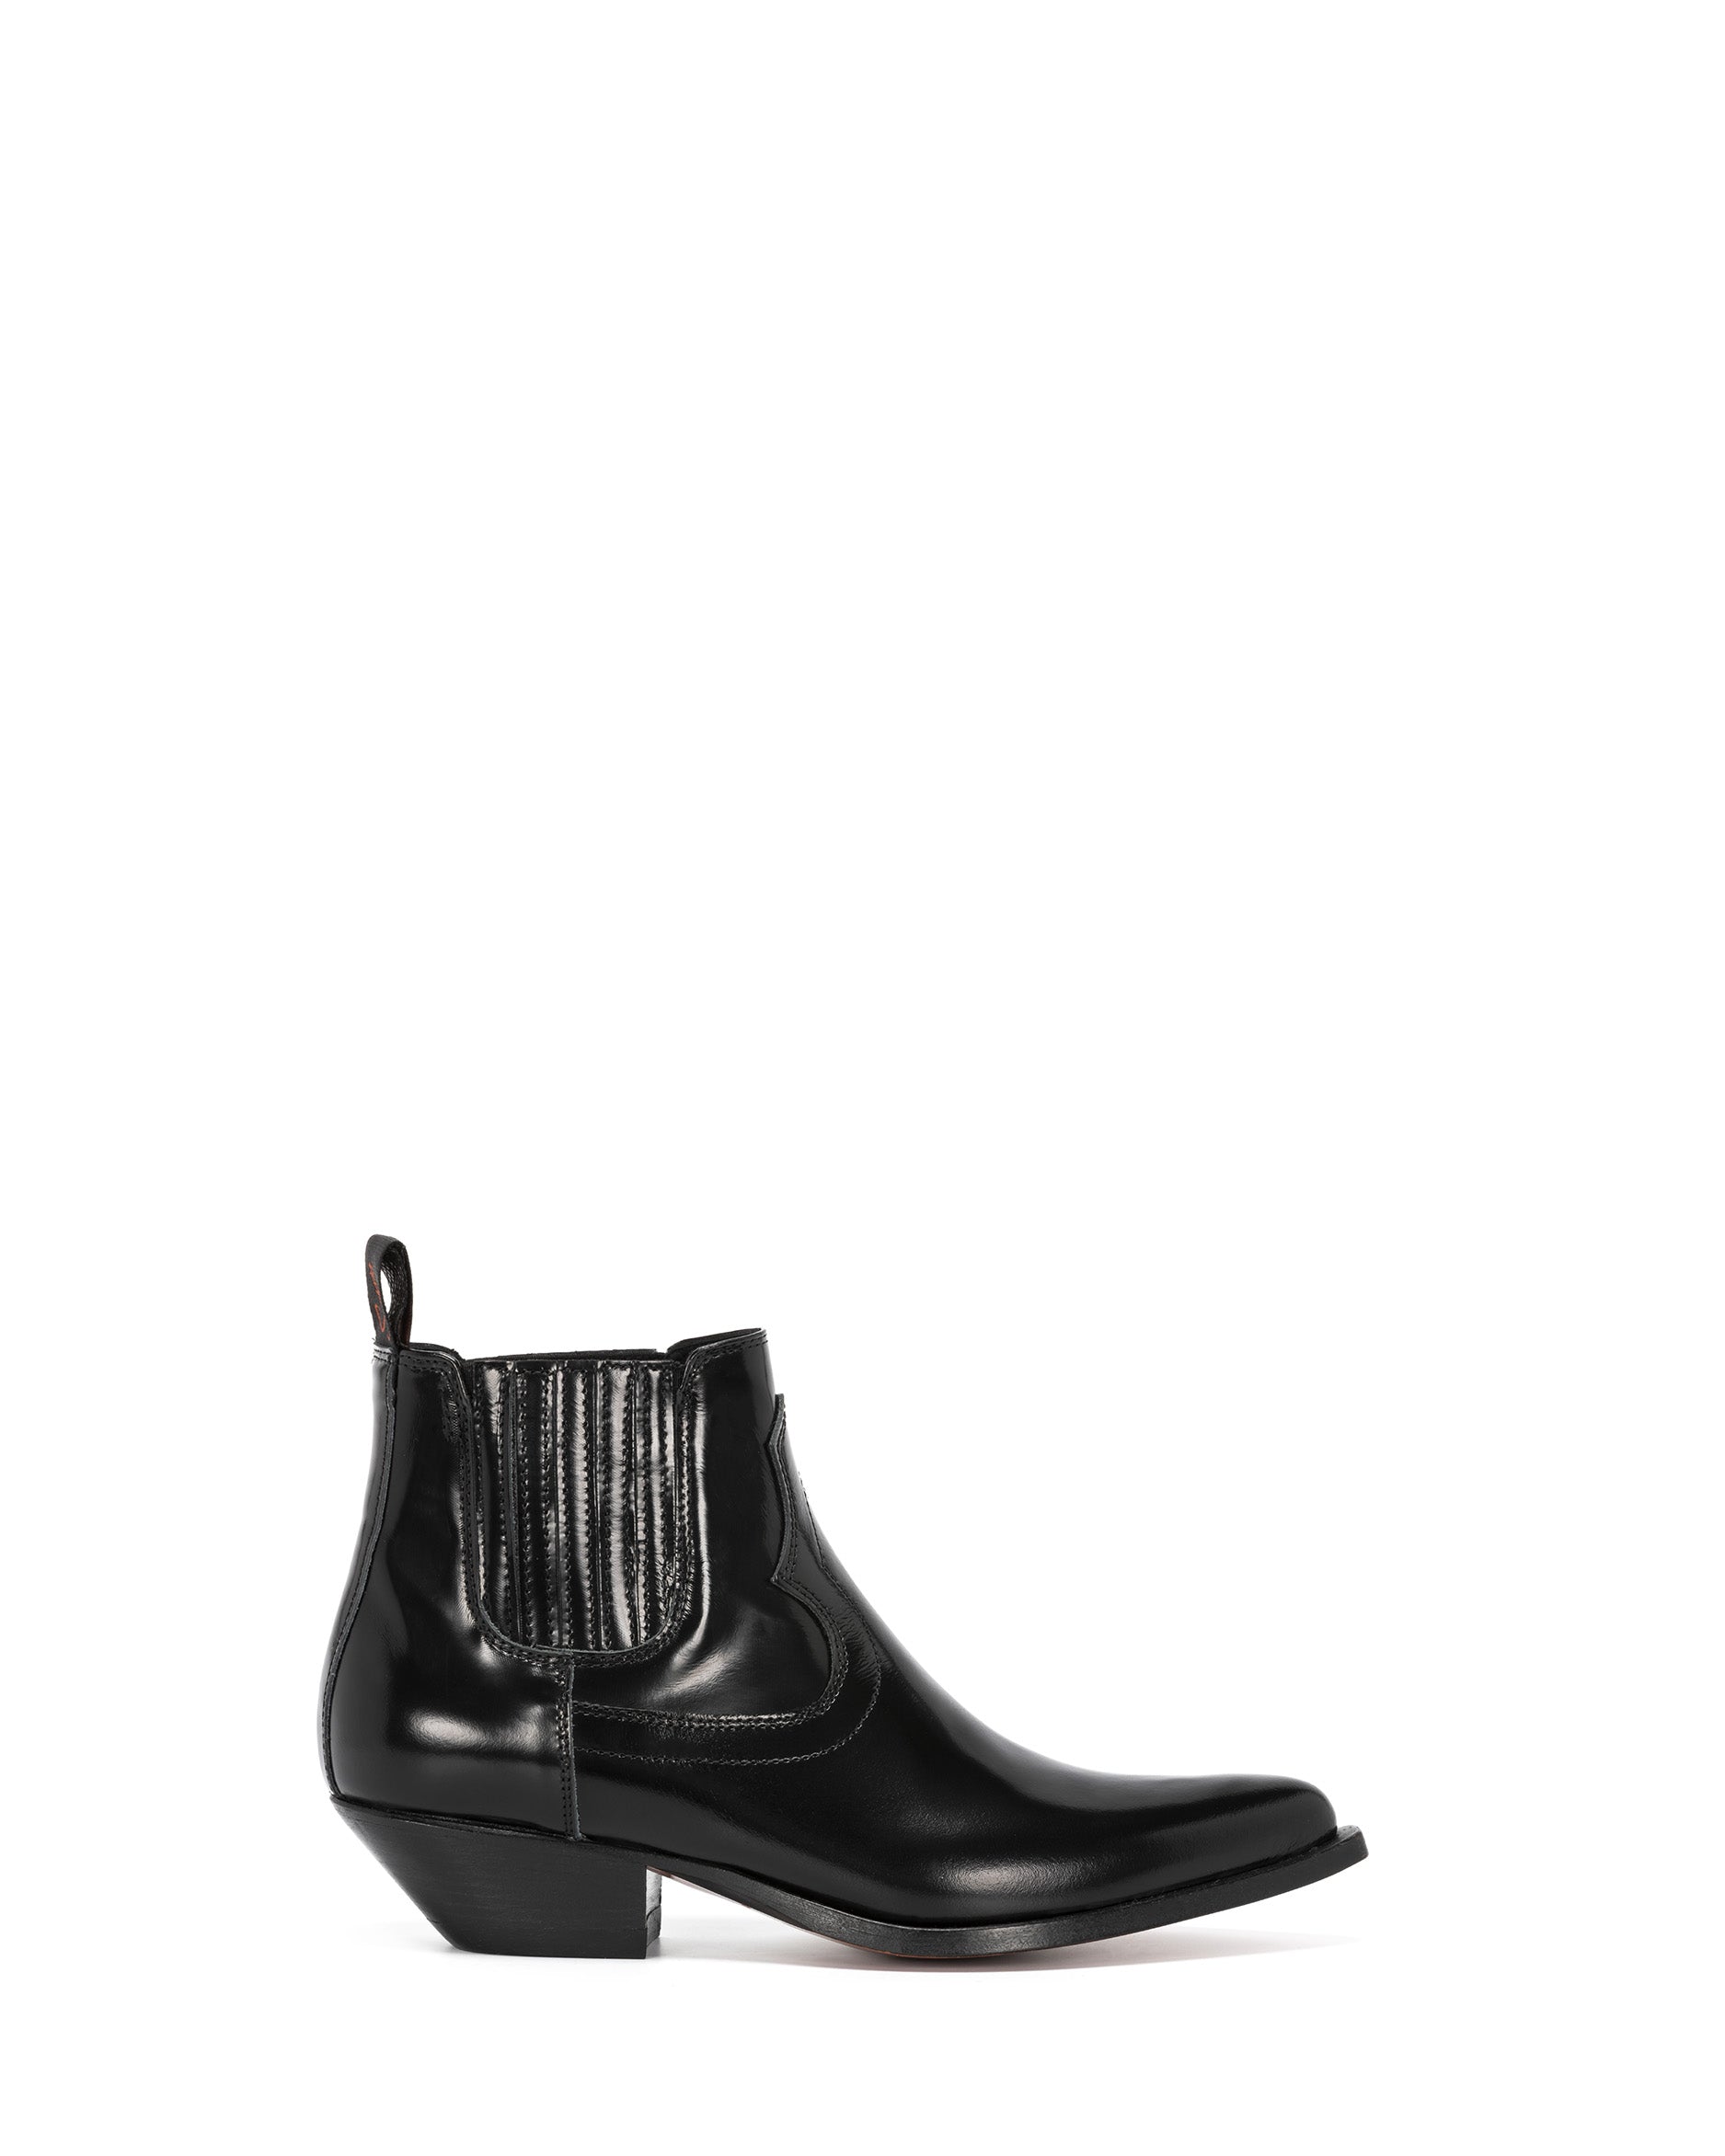 HIDALGO Men's Ankle Boots in Black Brushed Calfskin